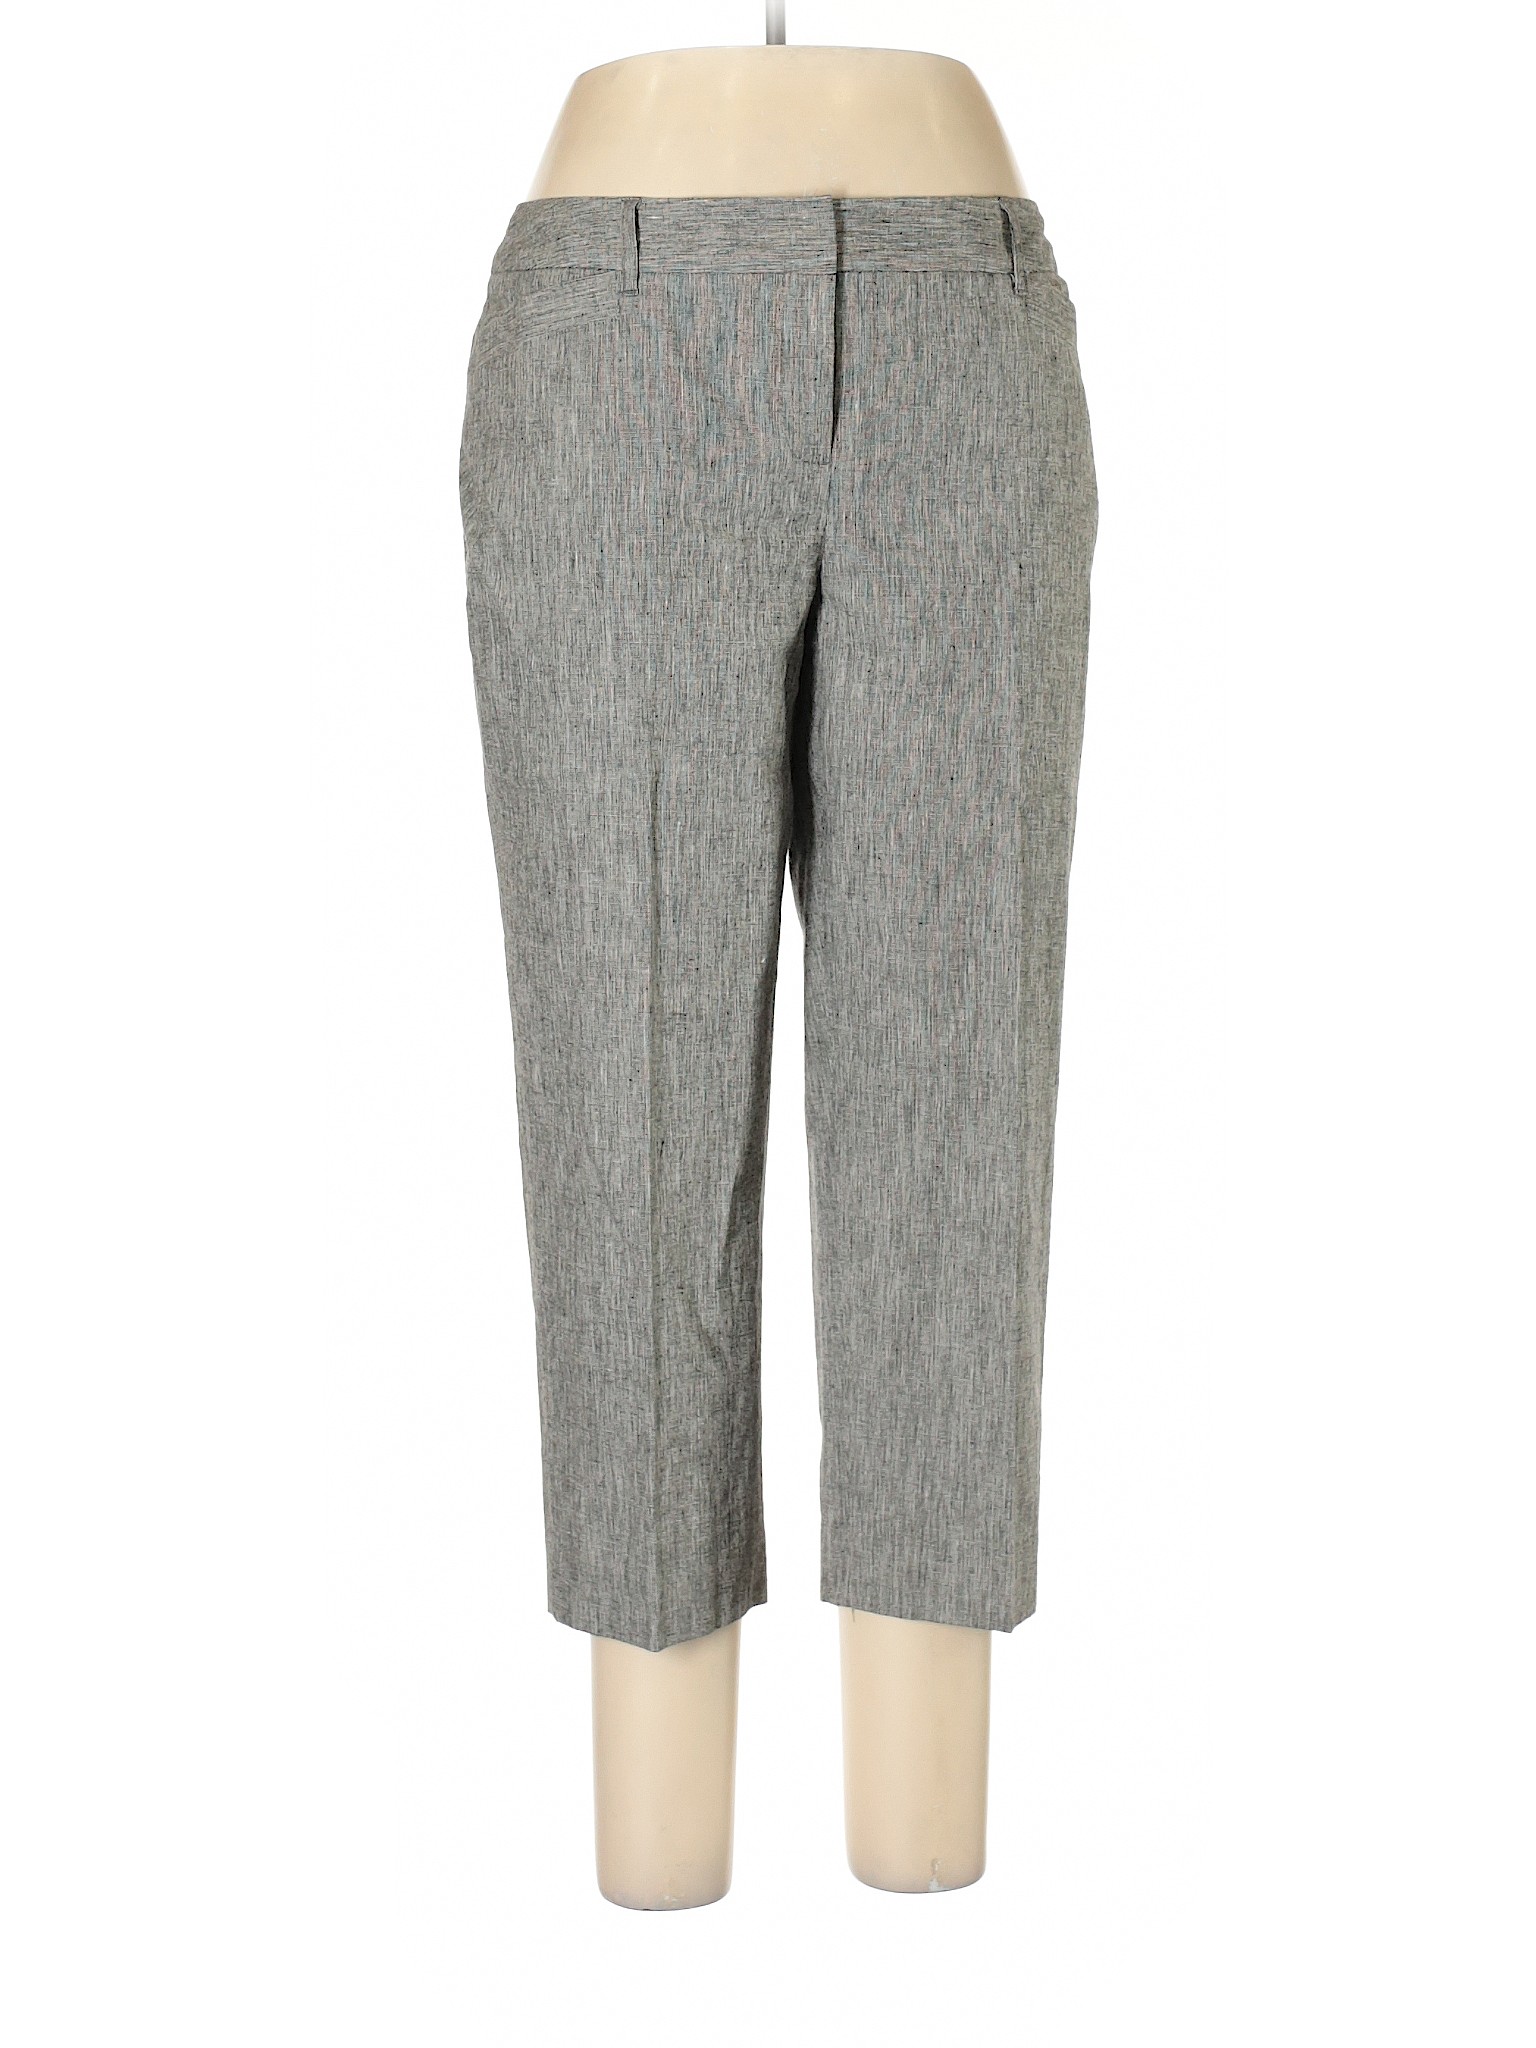 Style&Co Women Gray Dress Pants 12 | eBay